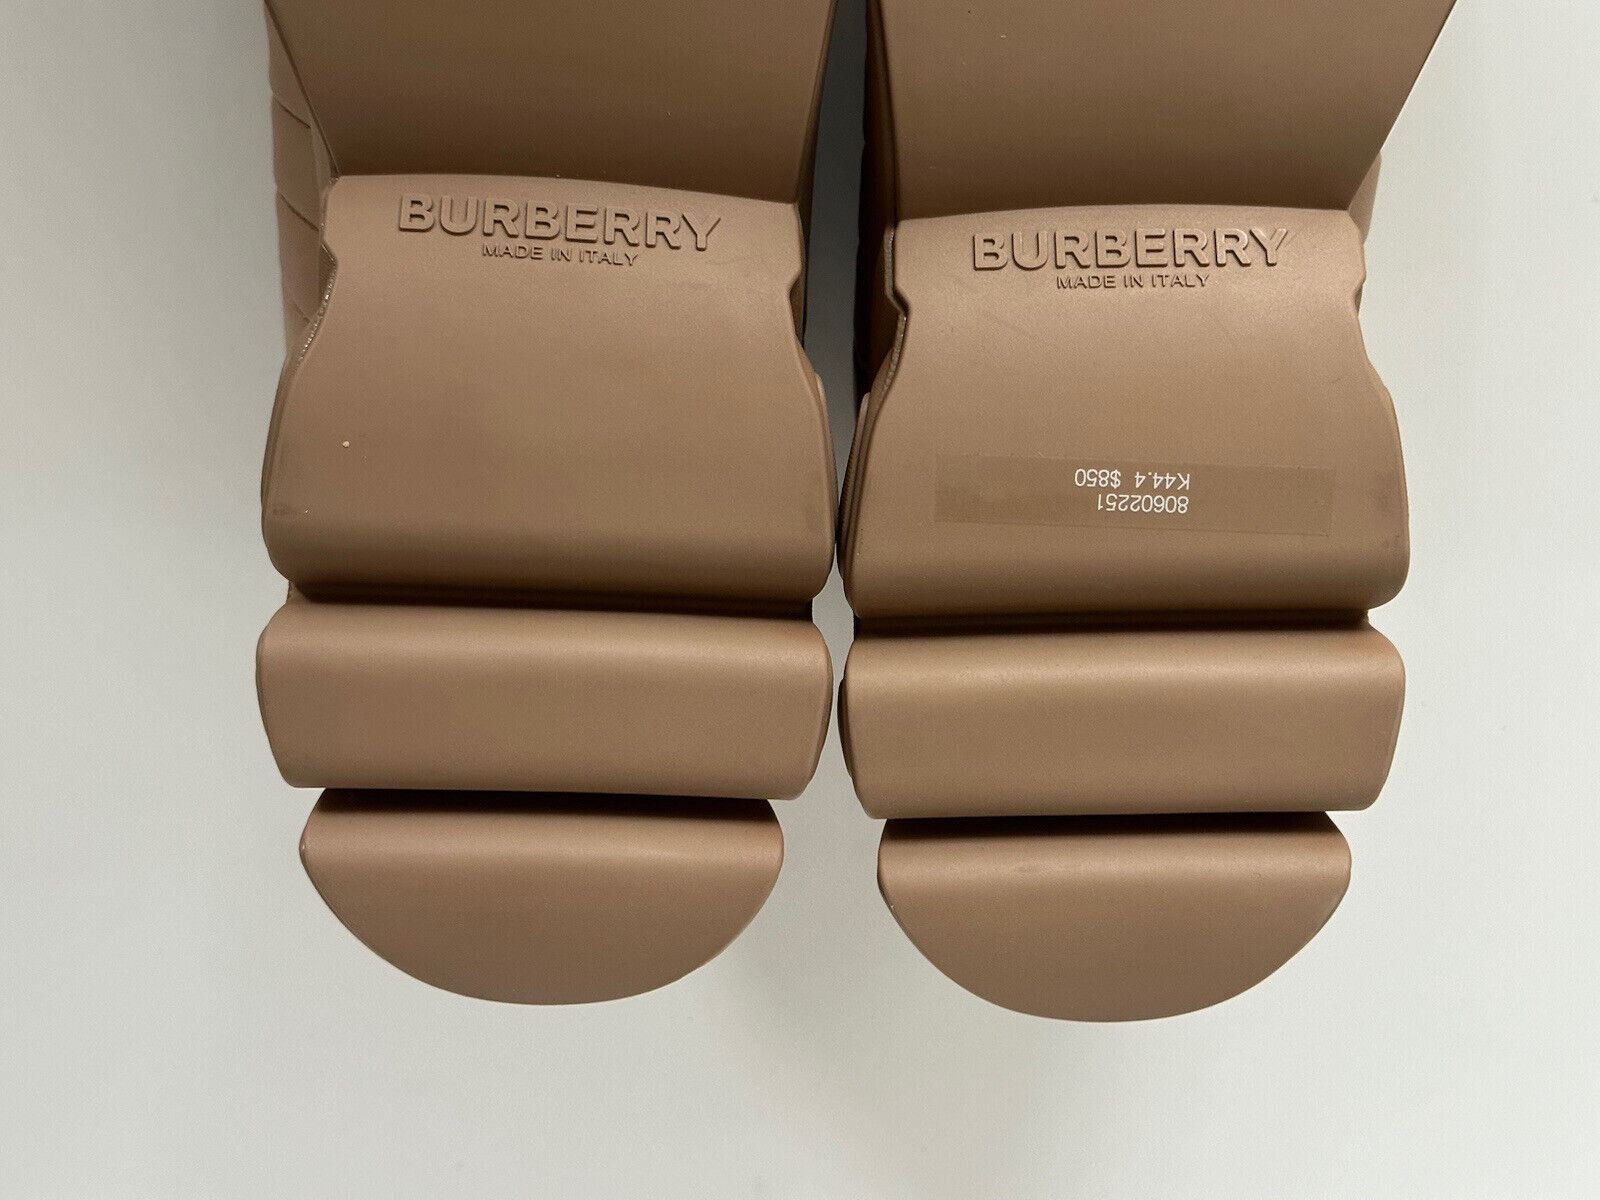 NIB $850 Burberry Quilted Dark Biscuit Leder-Sneaker 13 US (46 Eu) 8060225 IT 